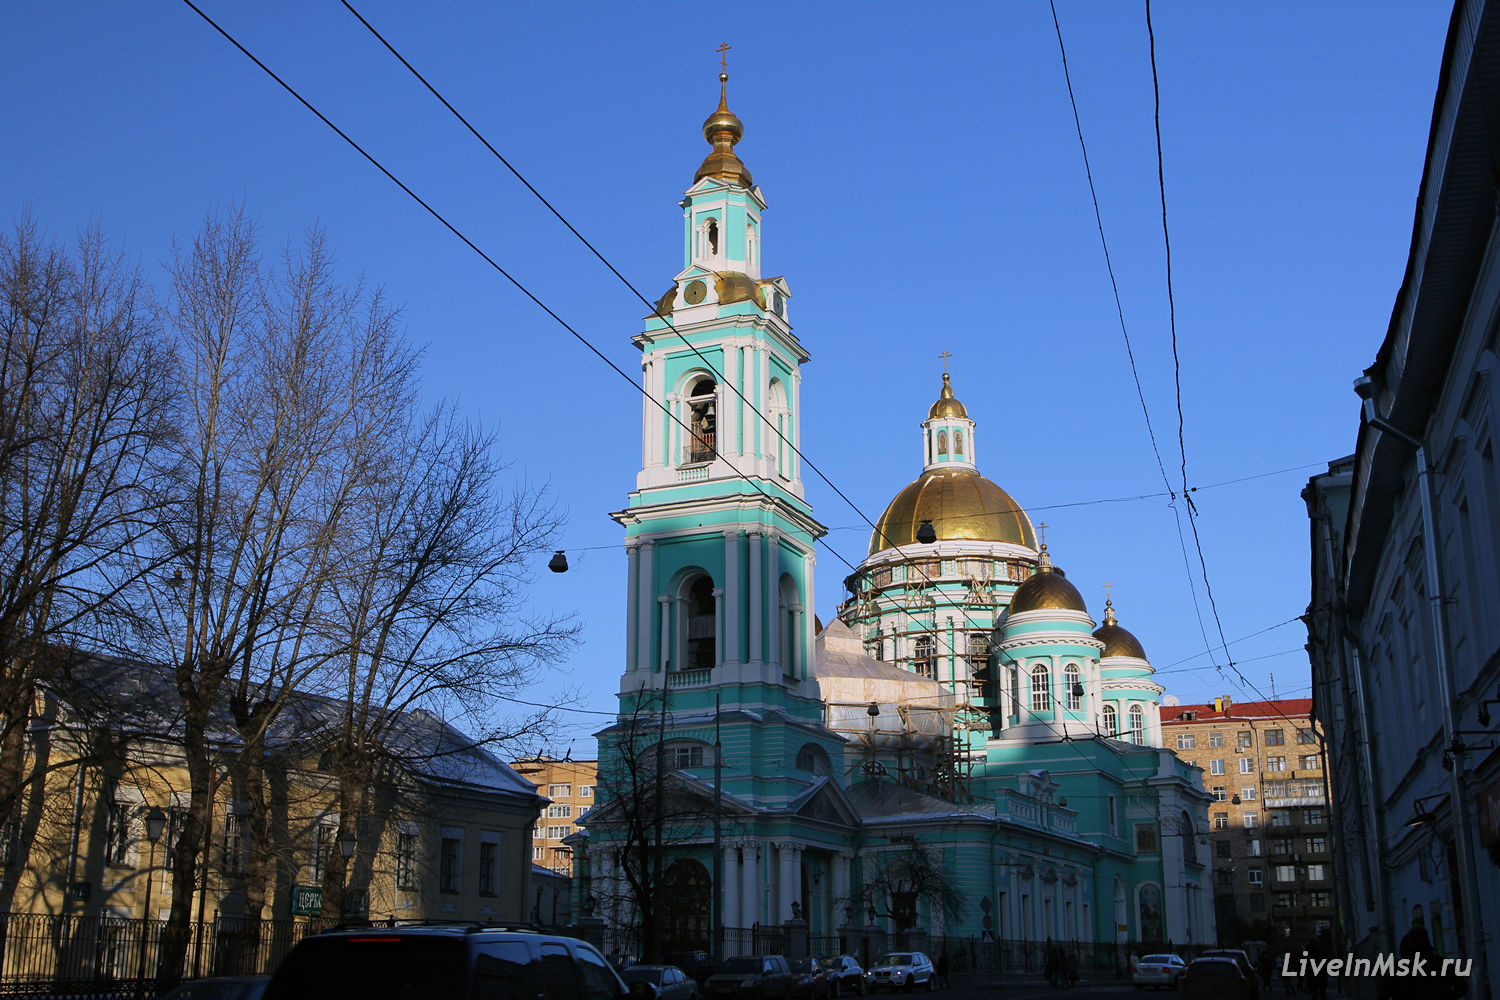 Елоховский собор, фото 2015 гдо